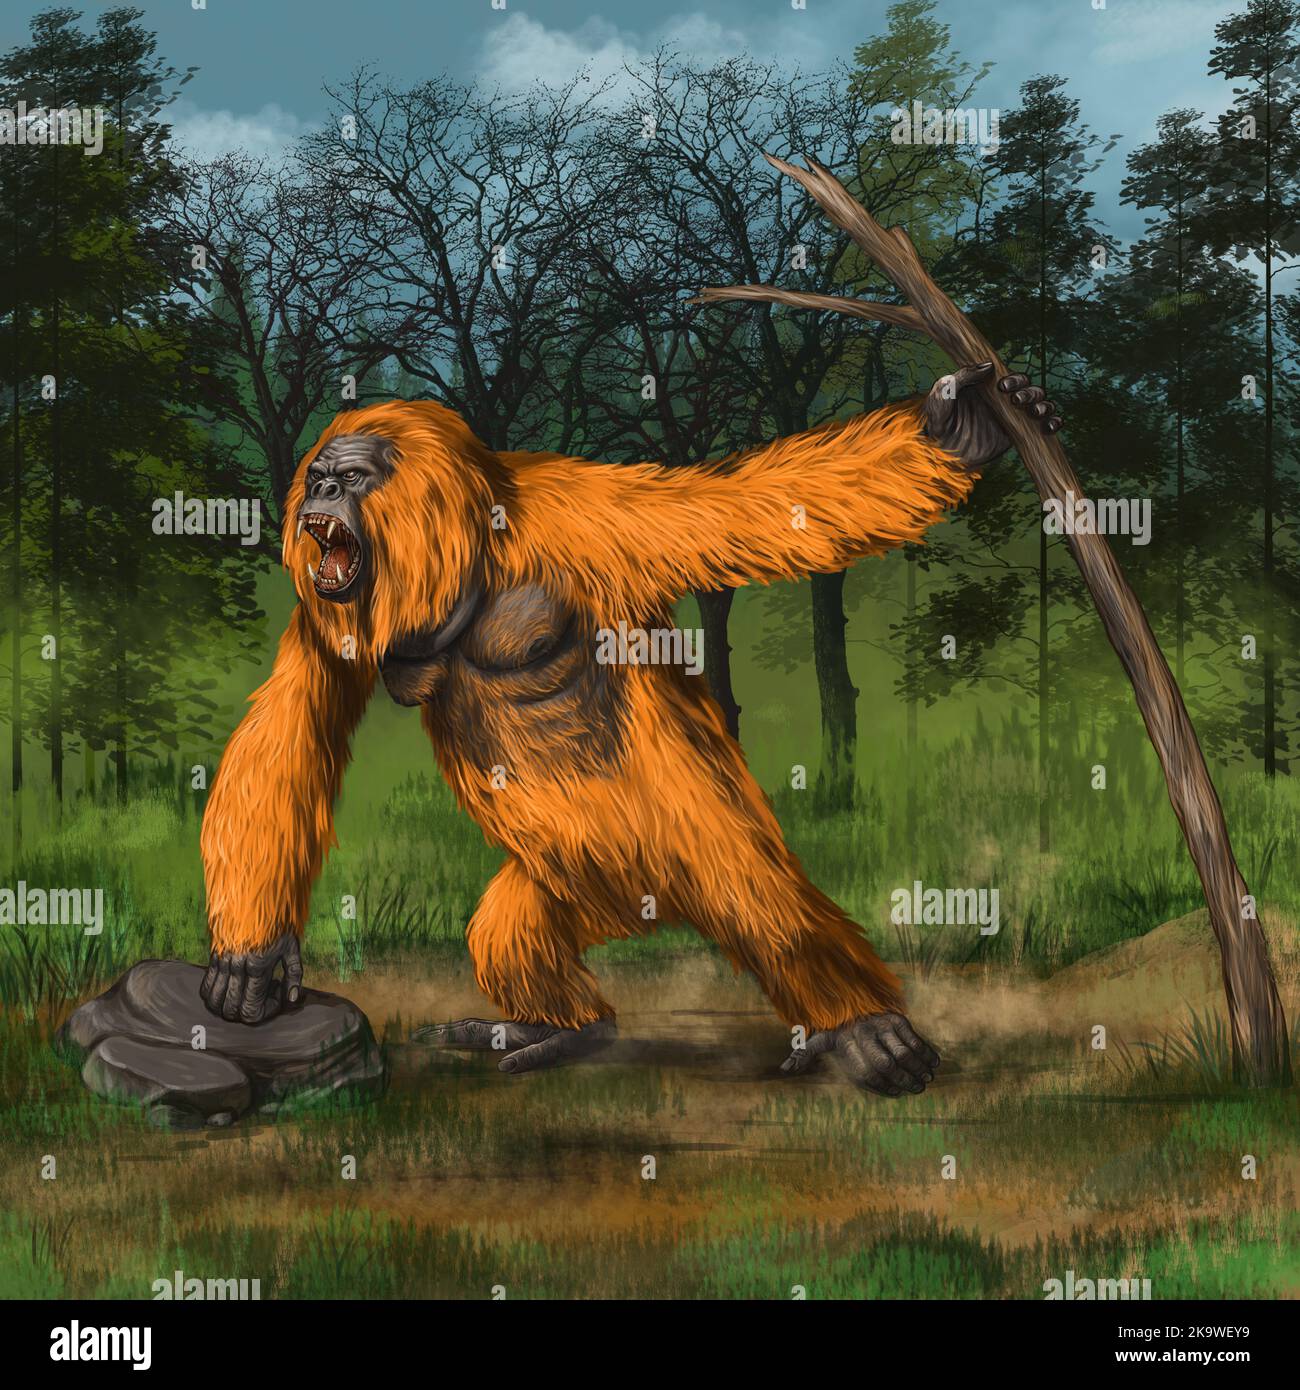 Prehistoric primates gigantopithecus in nature. Giant orangutan. Digital illustration with ancestor of human. Stock Photo